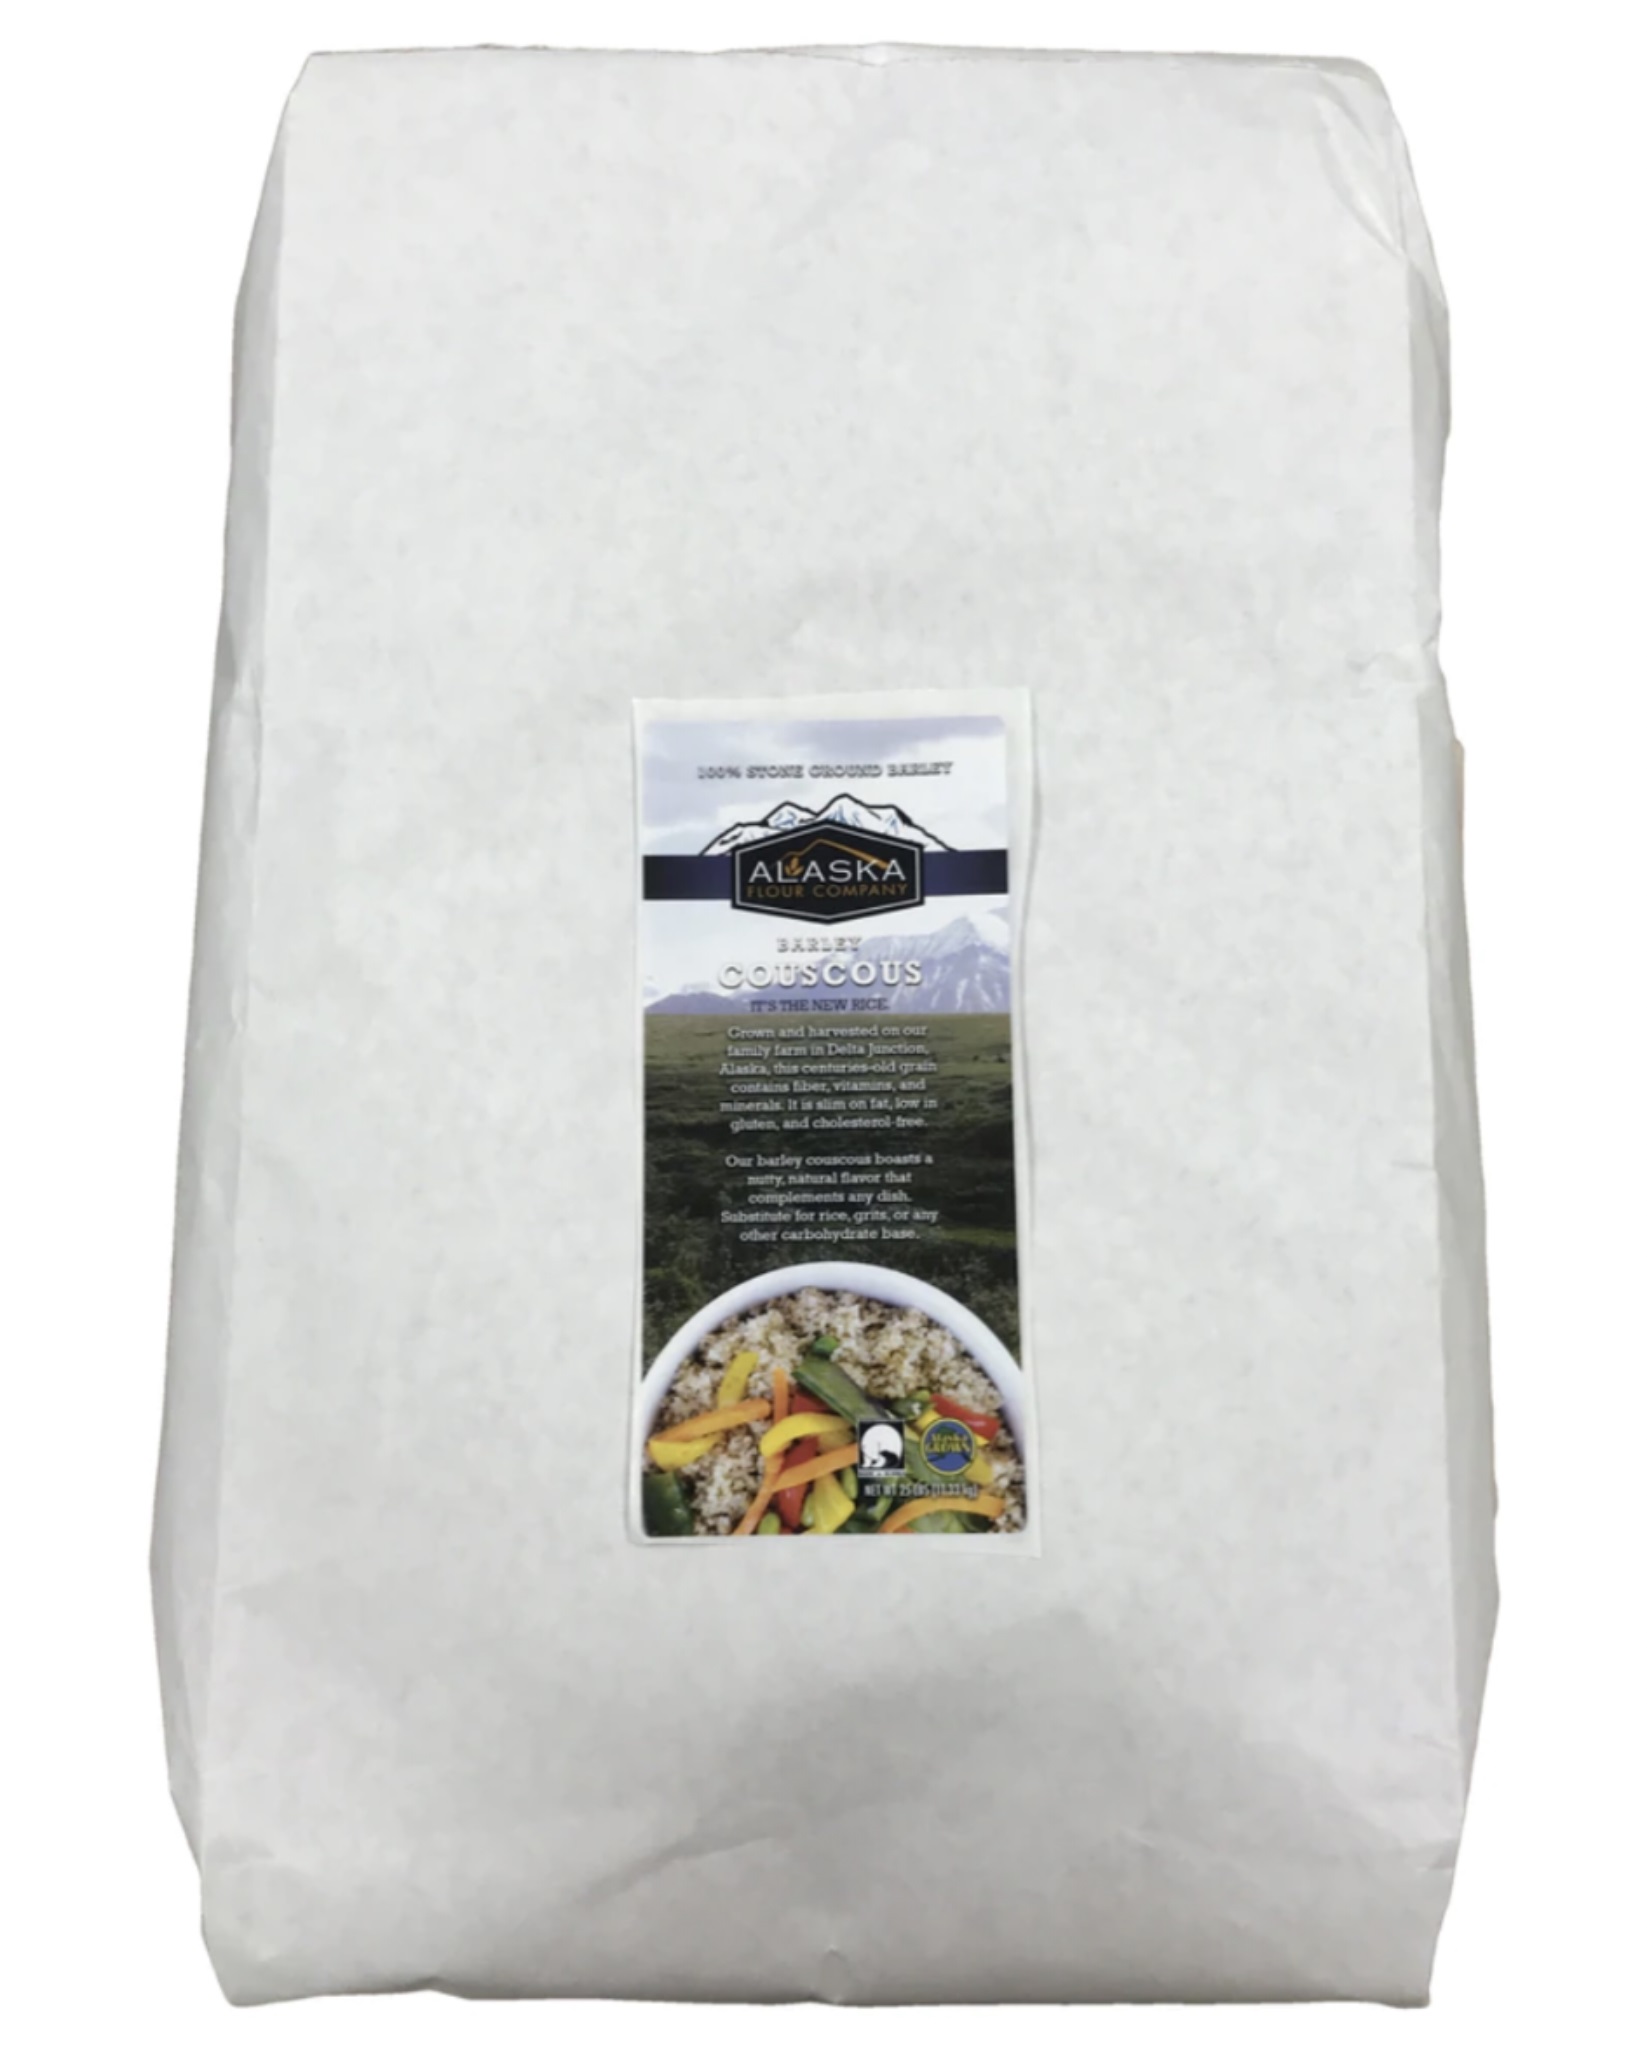 Couscous Barley 25lb AK Flour Company - Sold by PACK